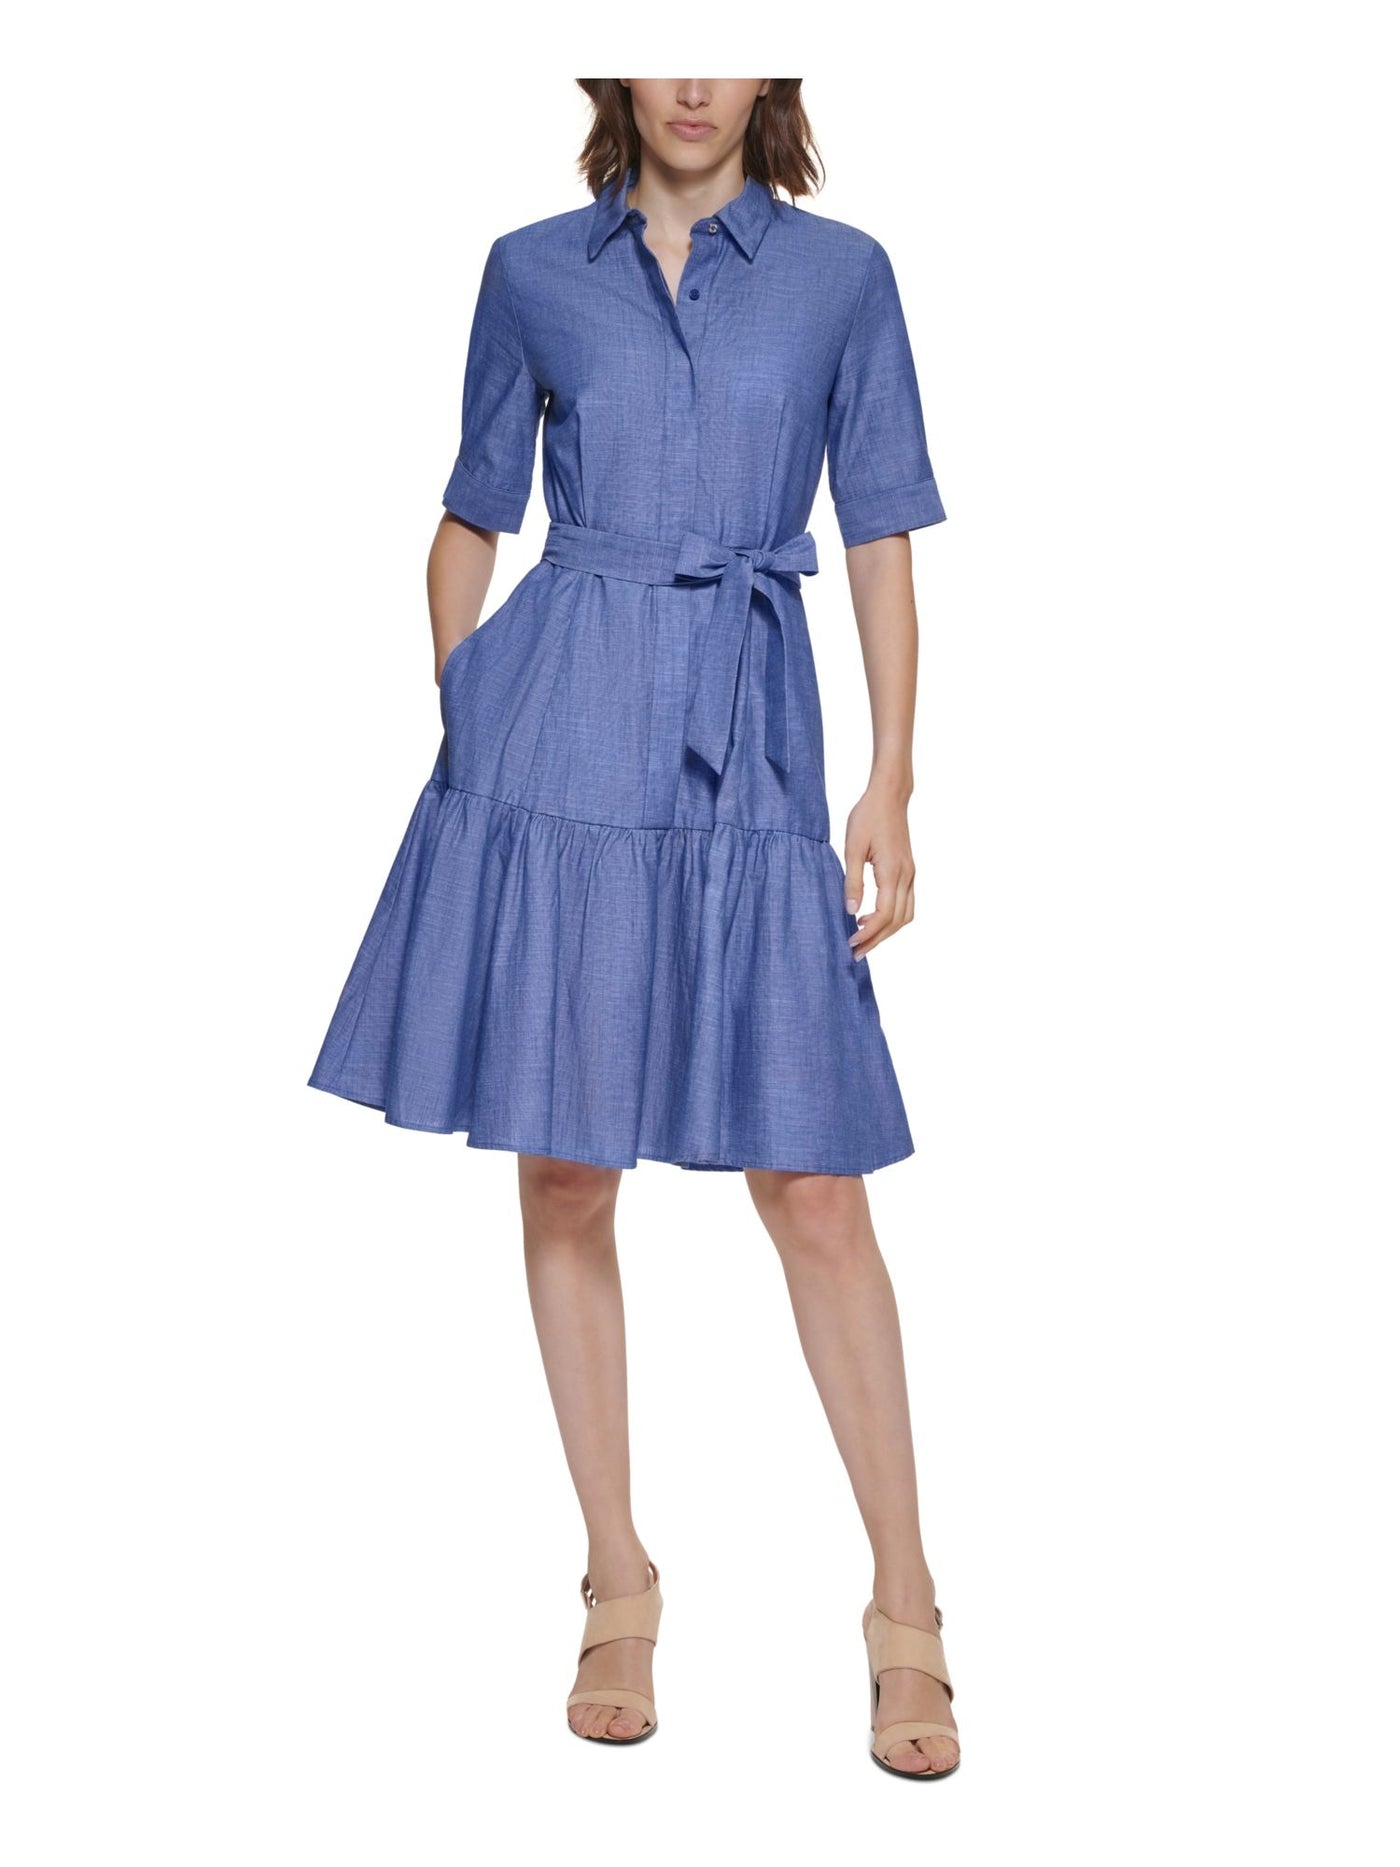 CALVIN KLEIN Womens Blue Tie Ruffled Short Sleeve Collared Above The Knee Wear To Work Shirt Dress 16